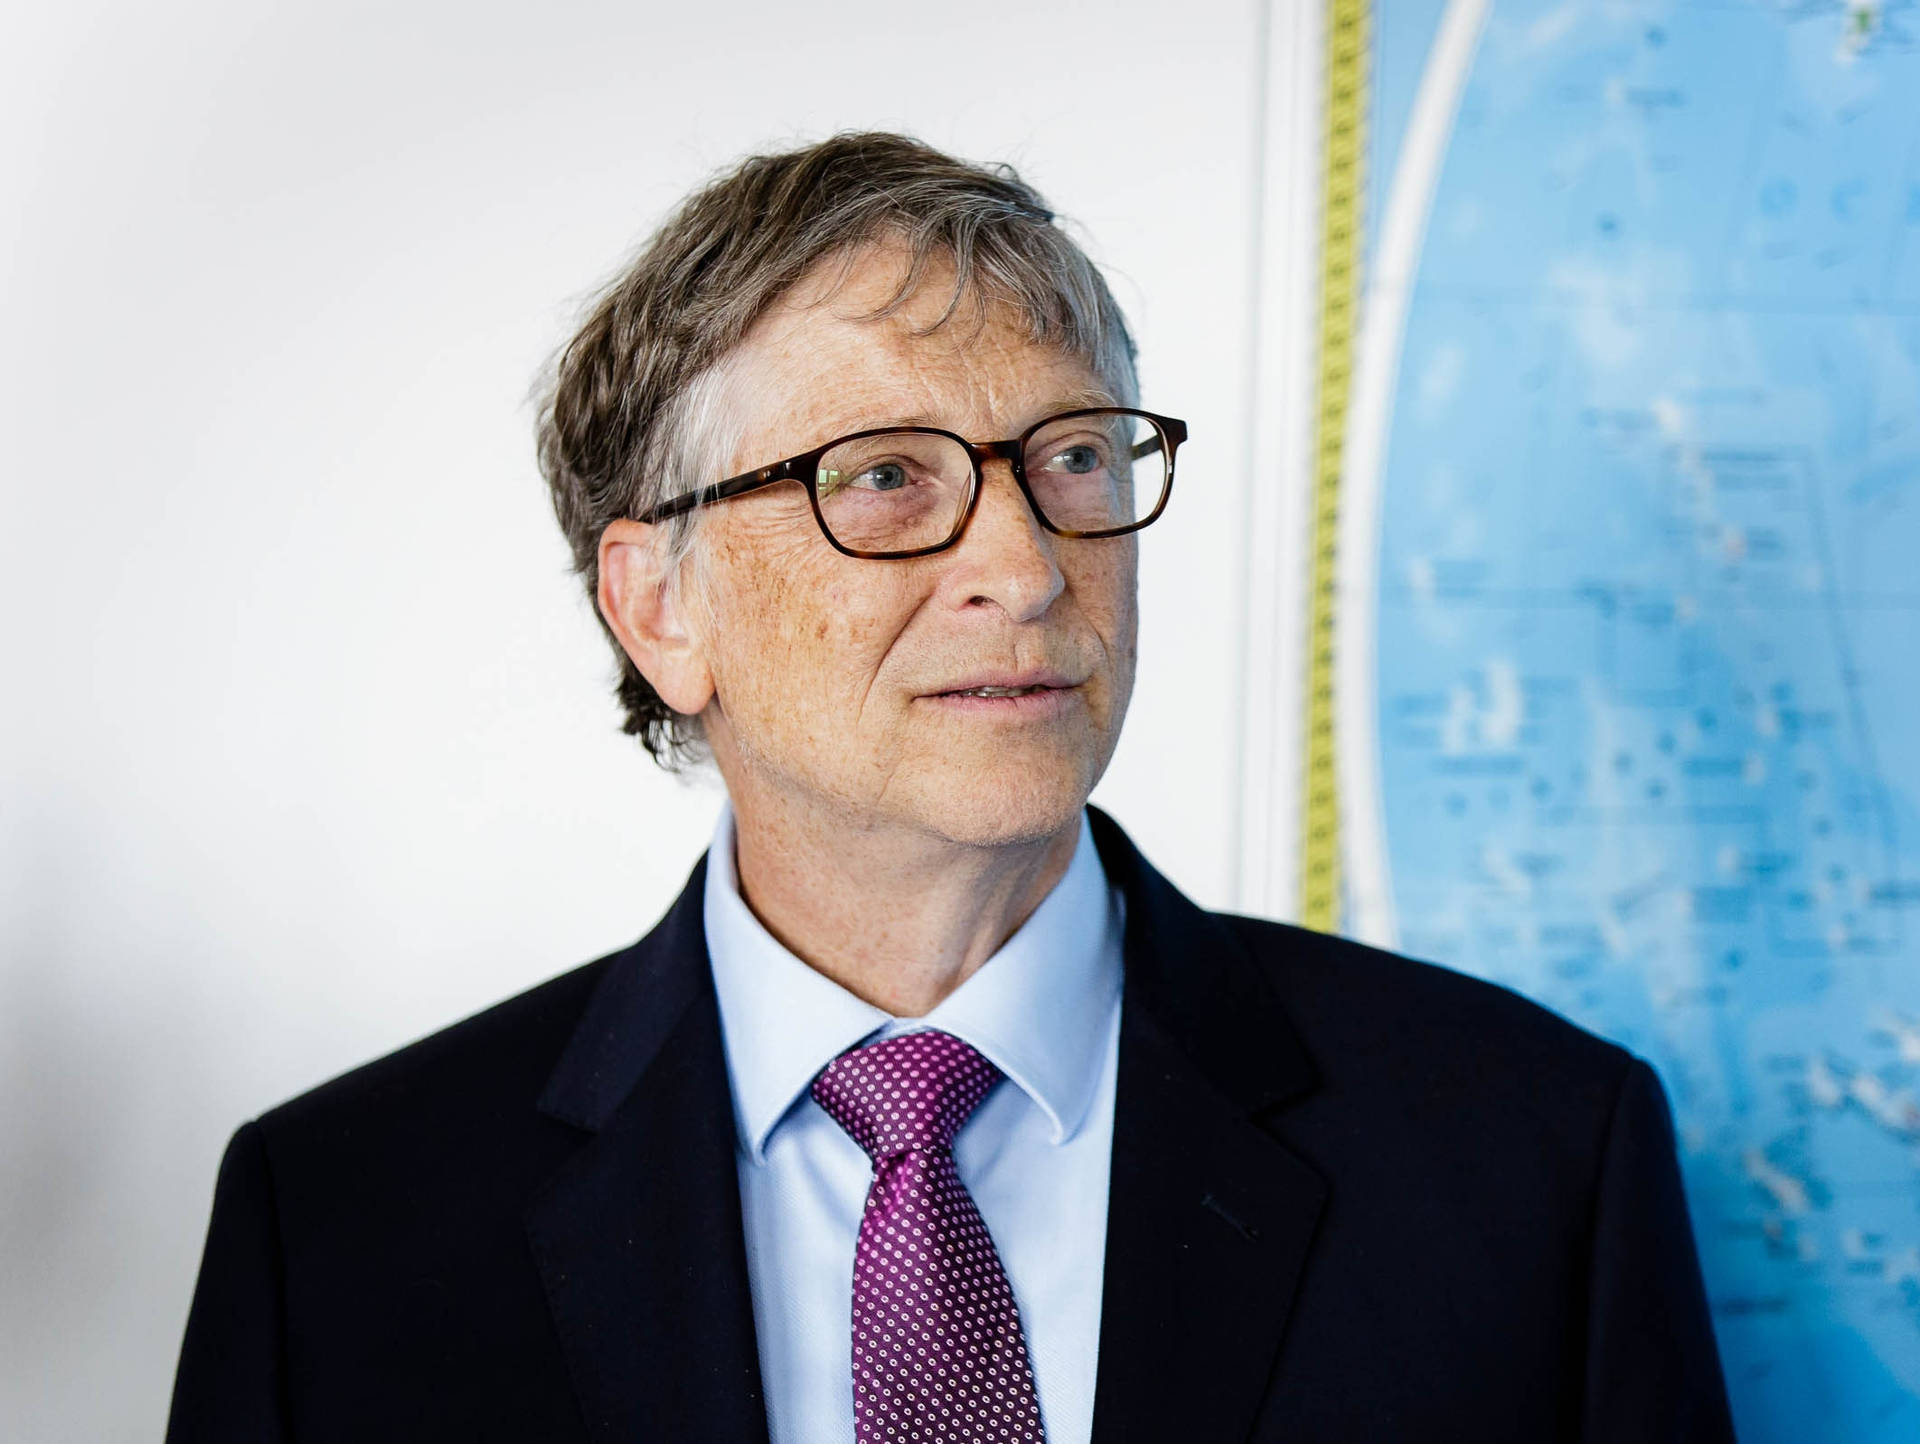 Bill Gates In Black Suit